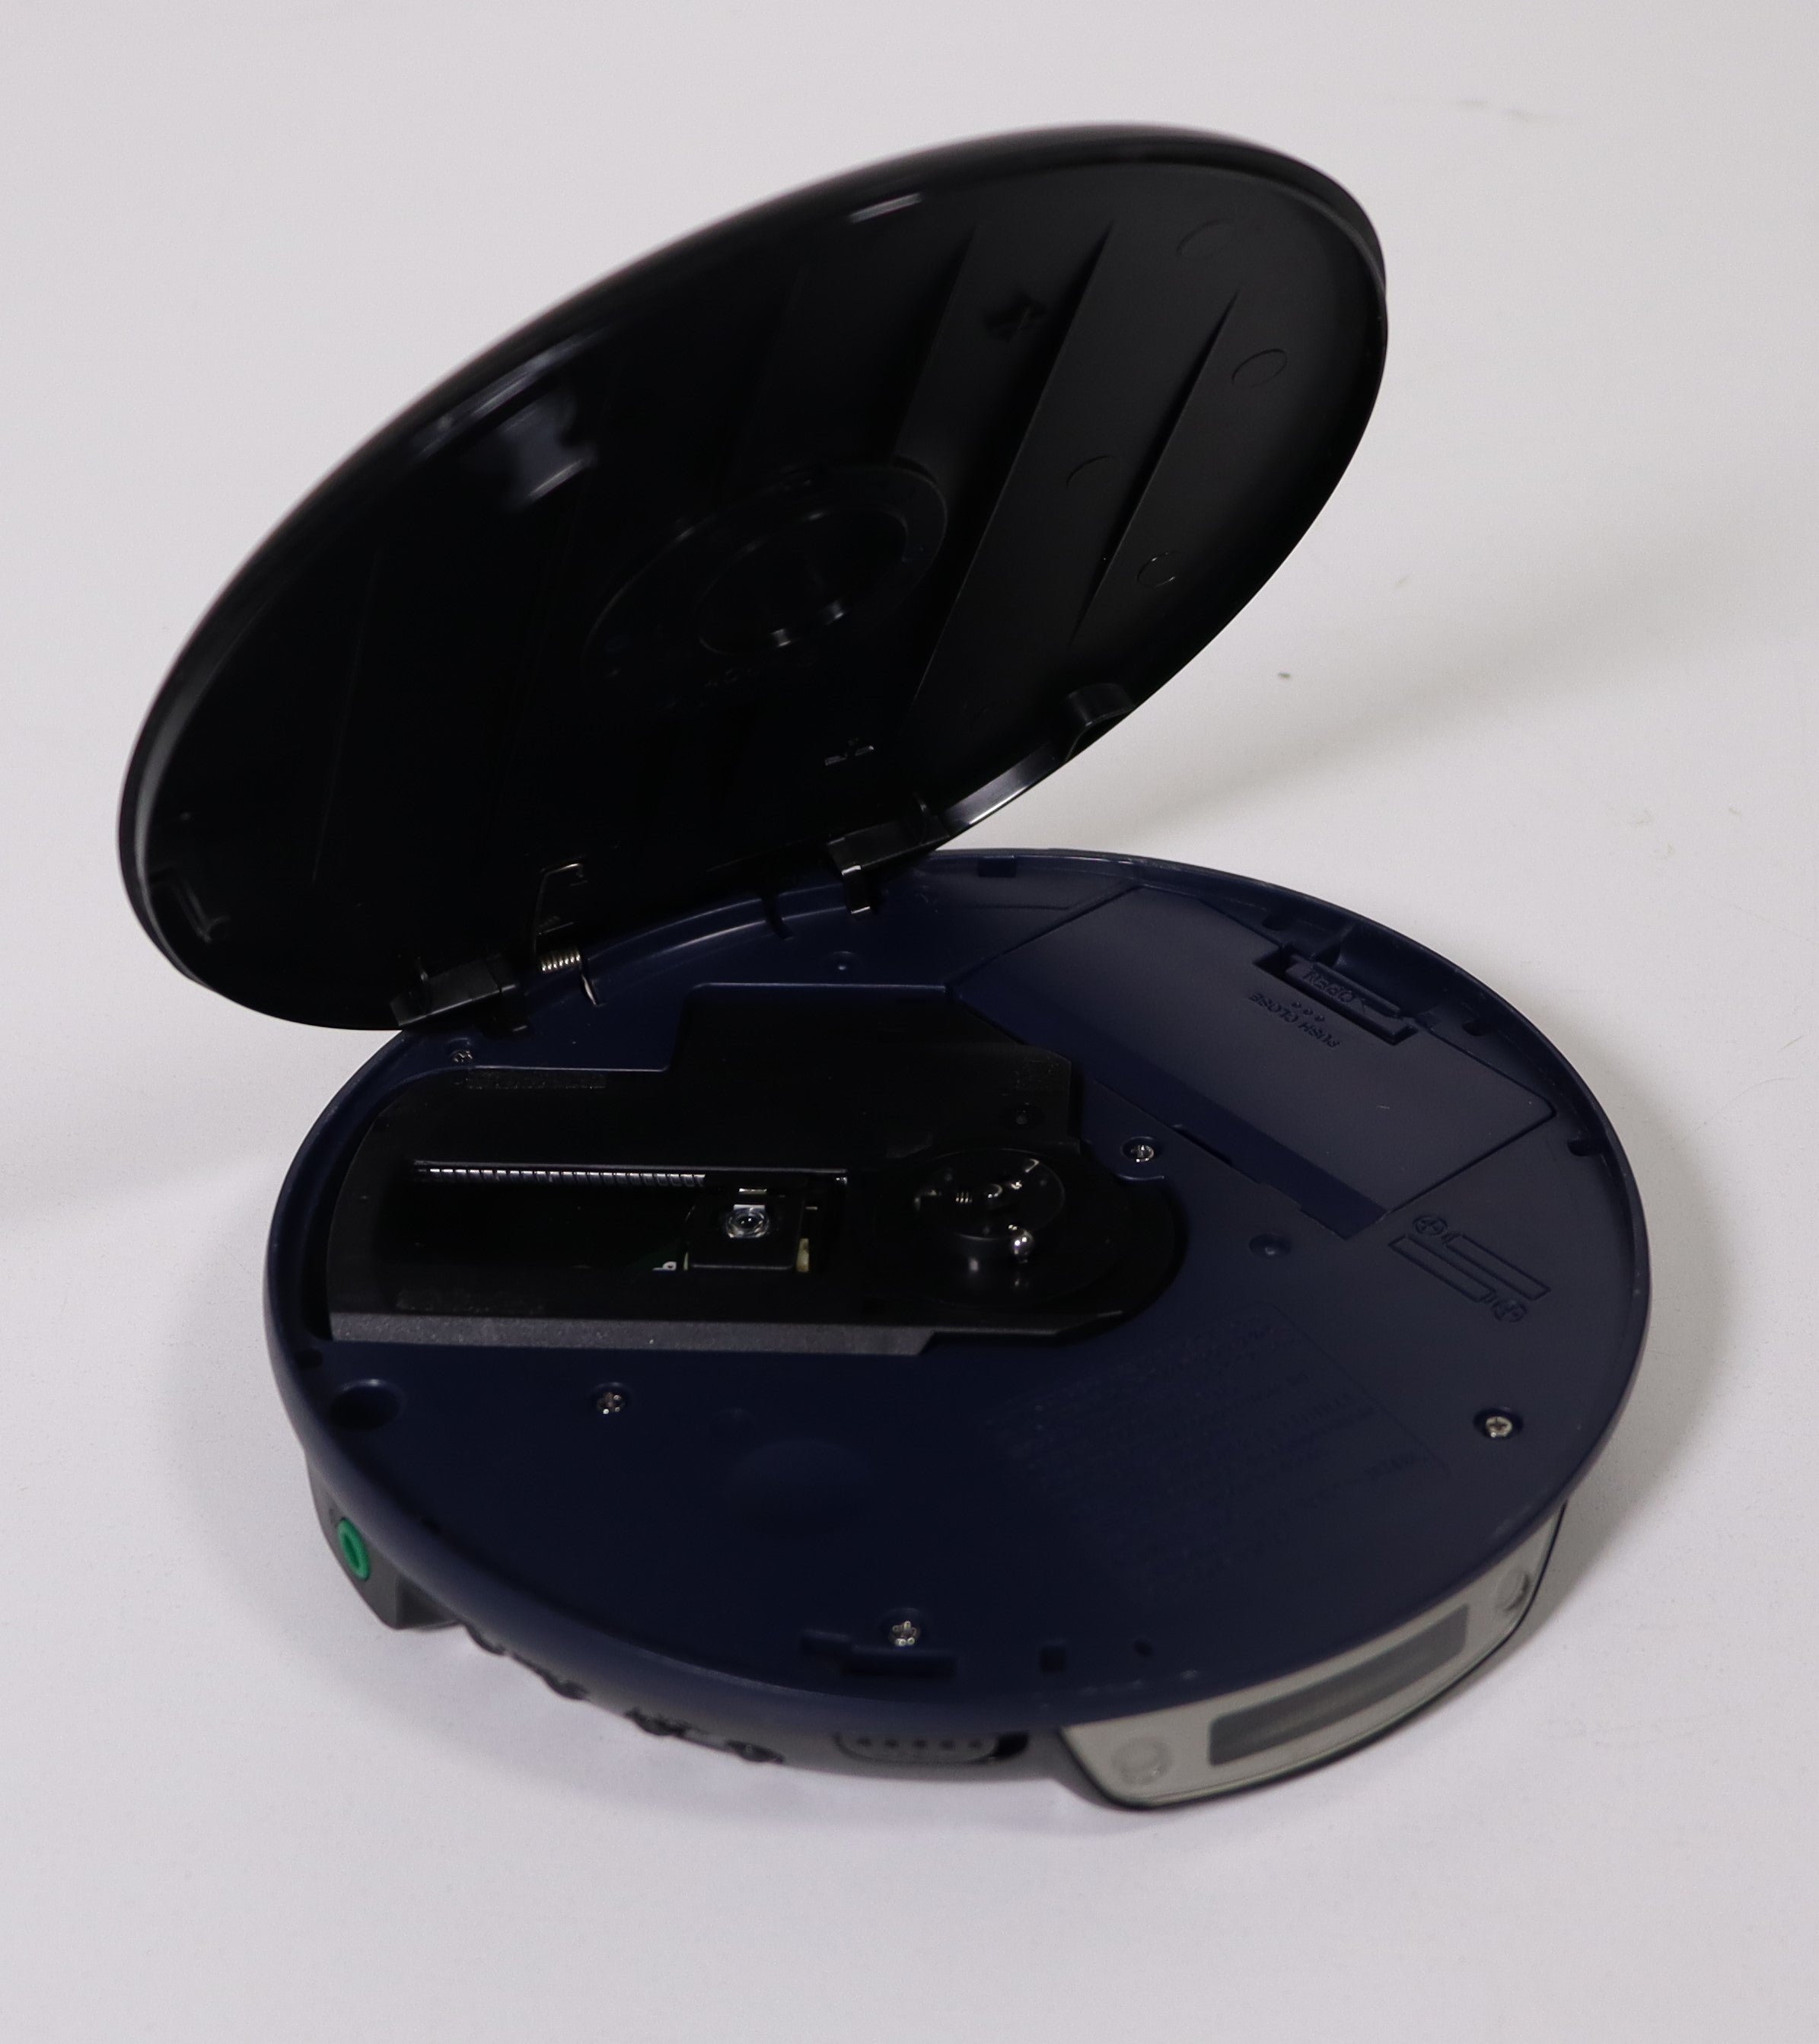 Sony DEJ010BLK CD Walkman Portable Compact Disc Player Black